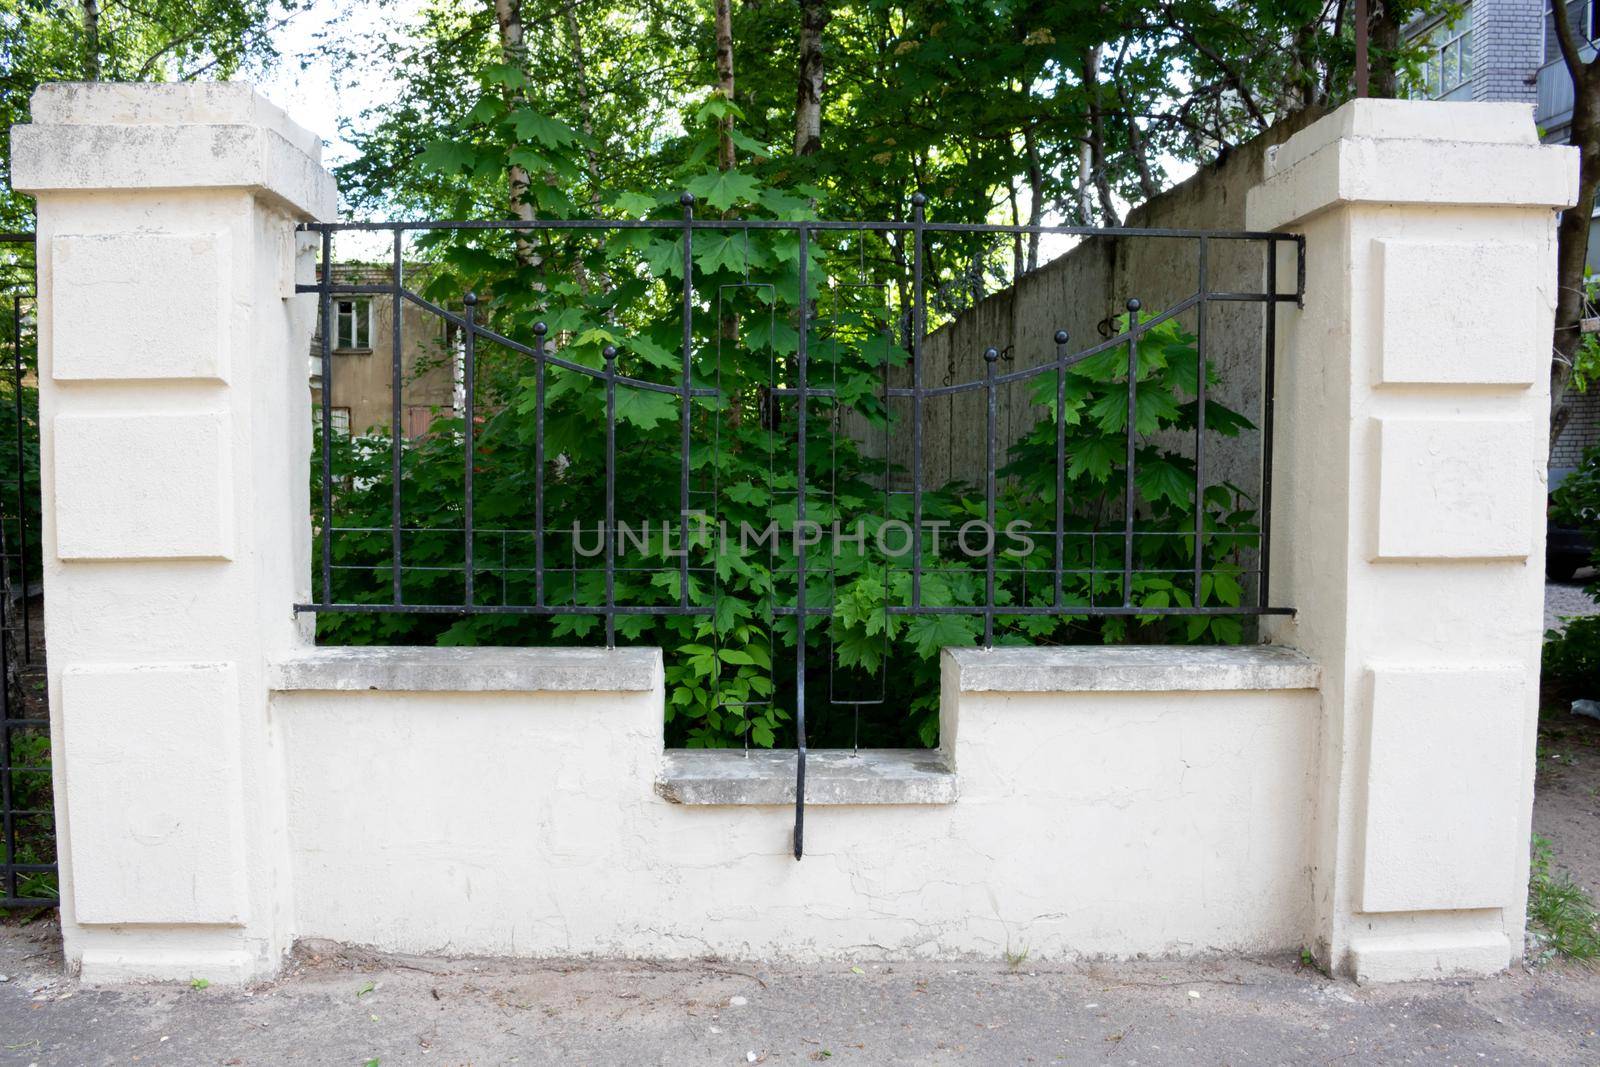 Black wrought iron fence between stone pillars by lapushka62